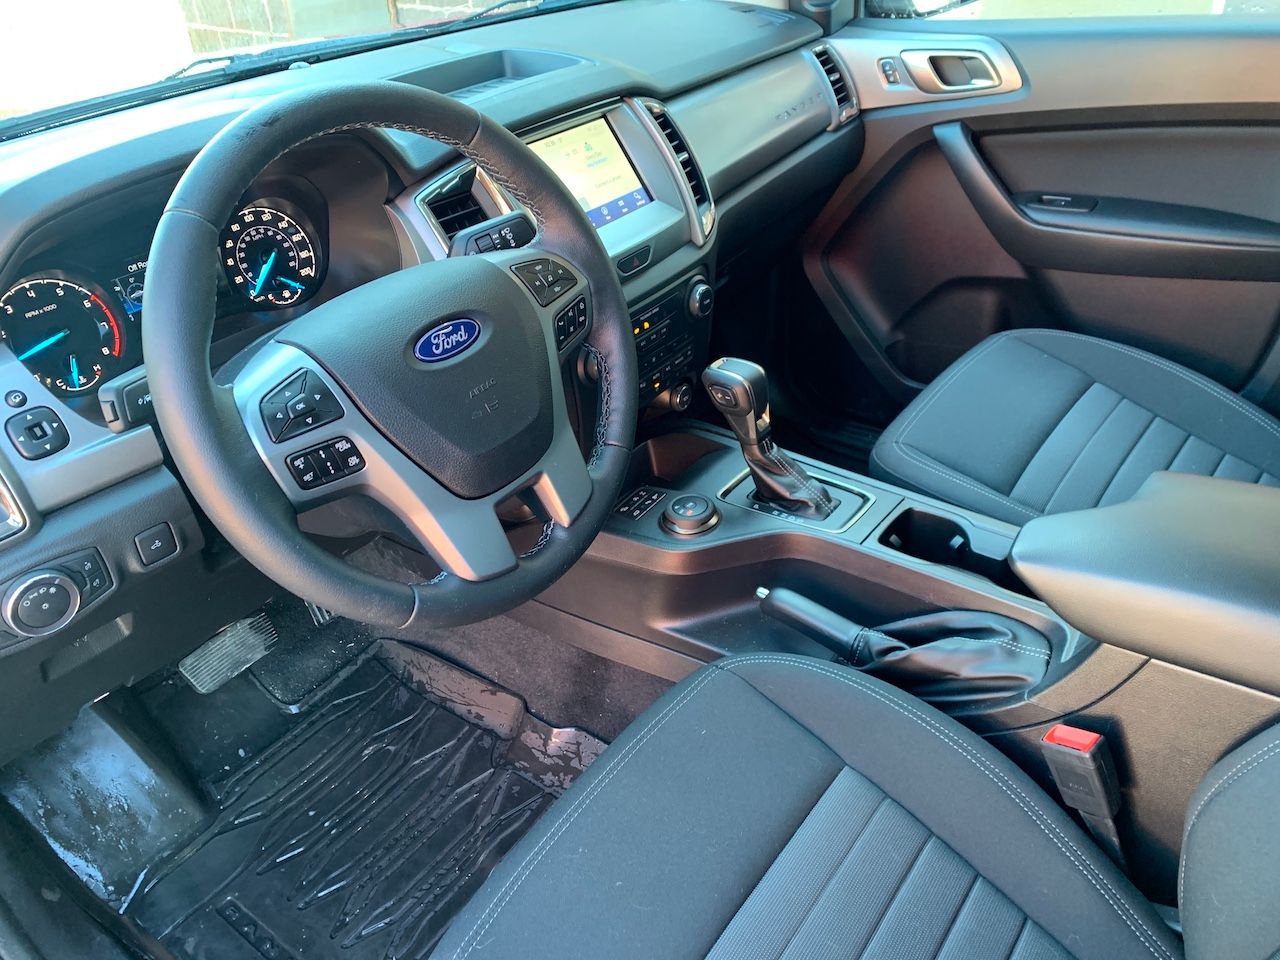 Ford Ranger Lariat interior